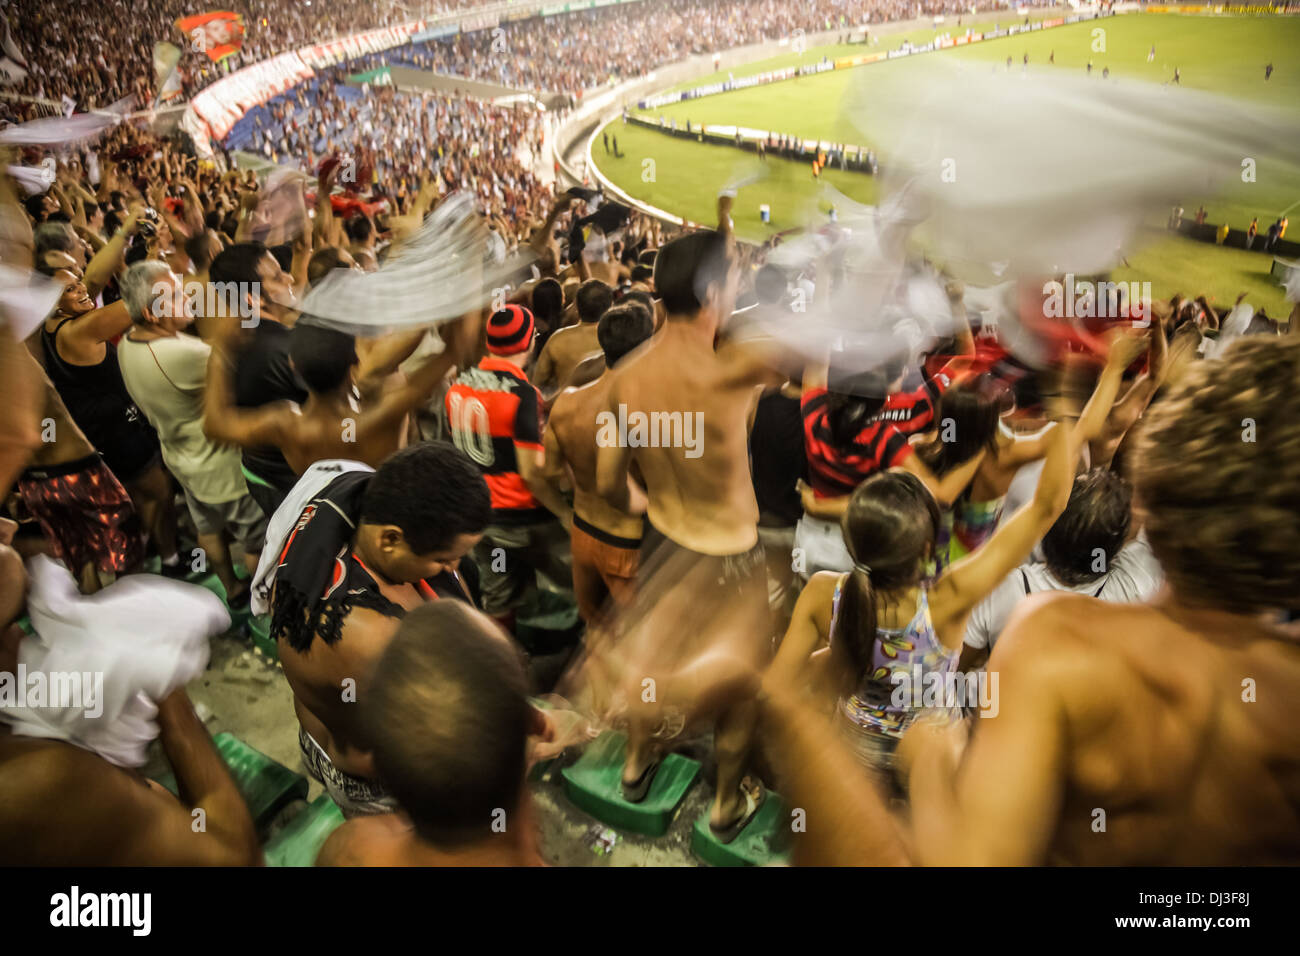 Supporters of Rio football club Flamengo (Clube de Regatas do Flamengo) celebrate a team goal score at the Maracanã stadium. Stock Photo